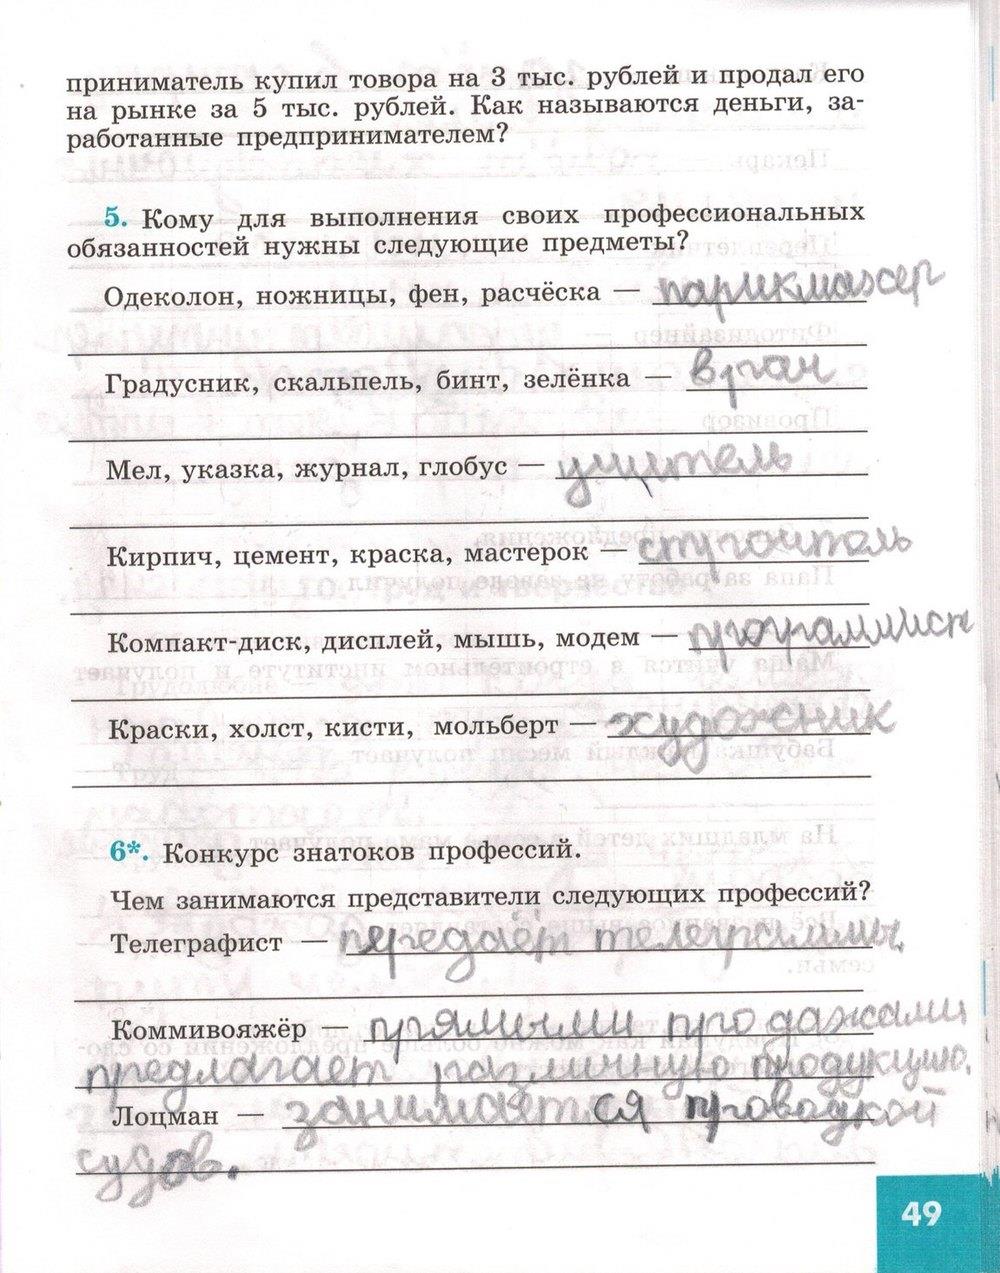 гдз 5 класс рабочая тетрадь страница 49 обществознание Иванова, Хотеенкова